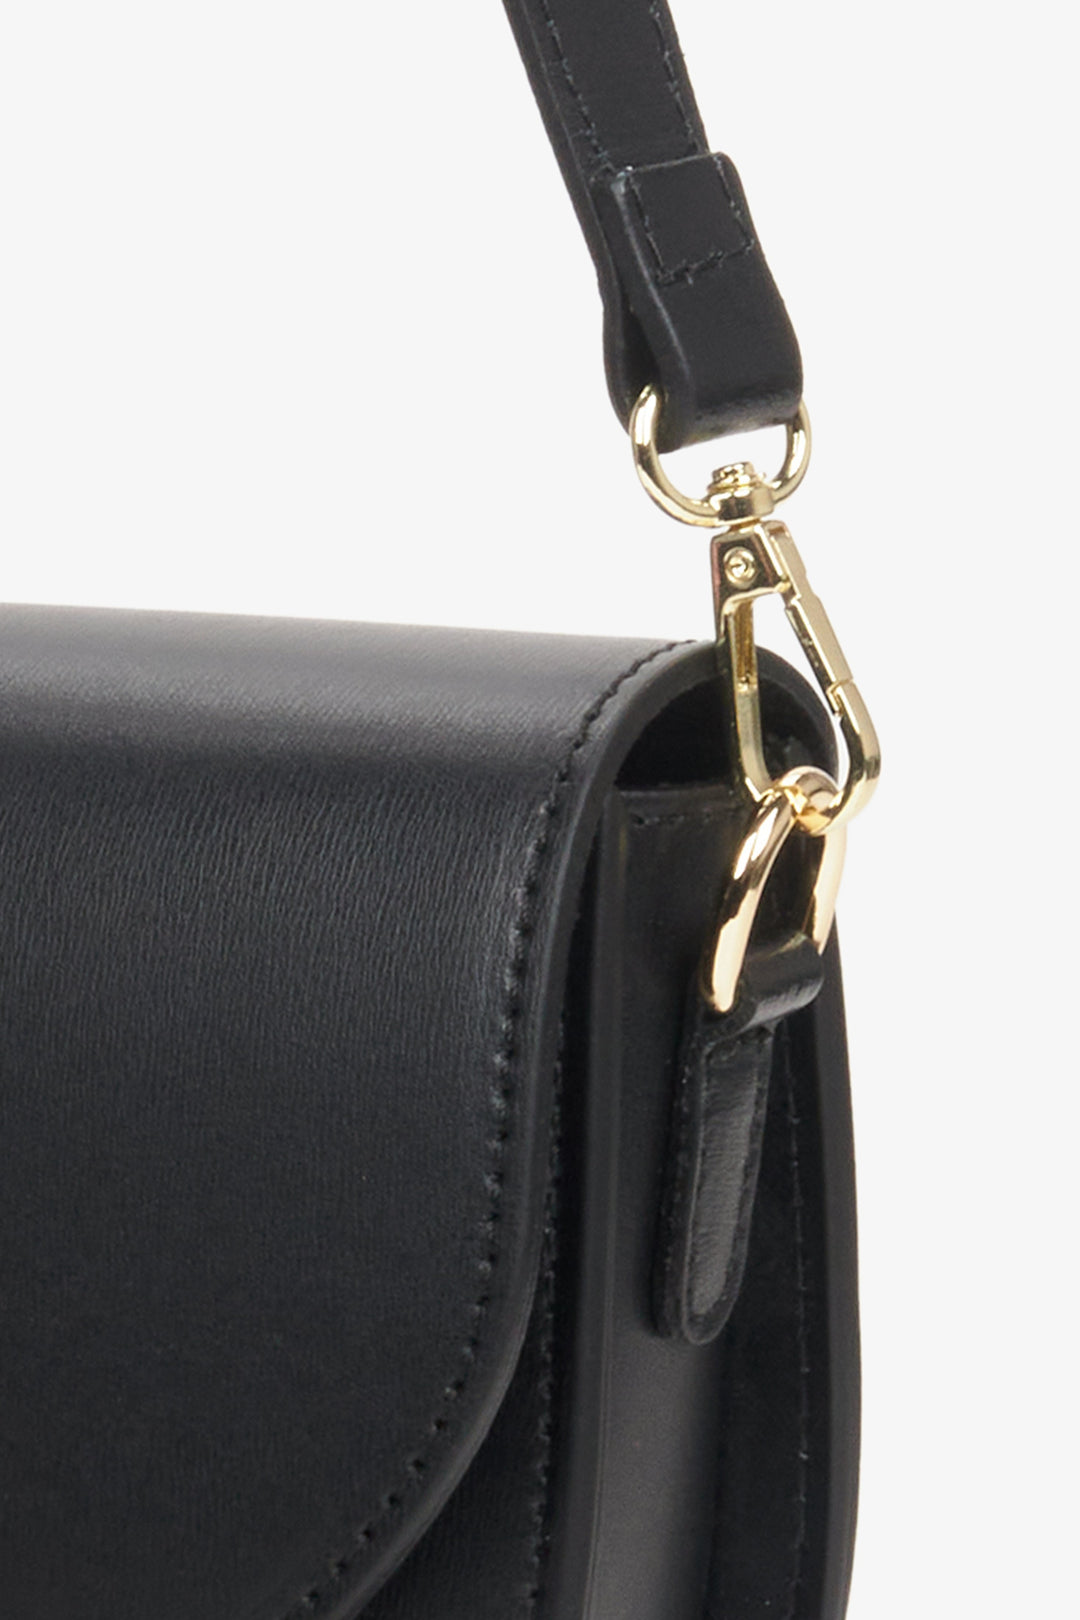 Italian leather black handbag Estro - a close-up on details.